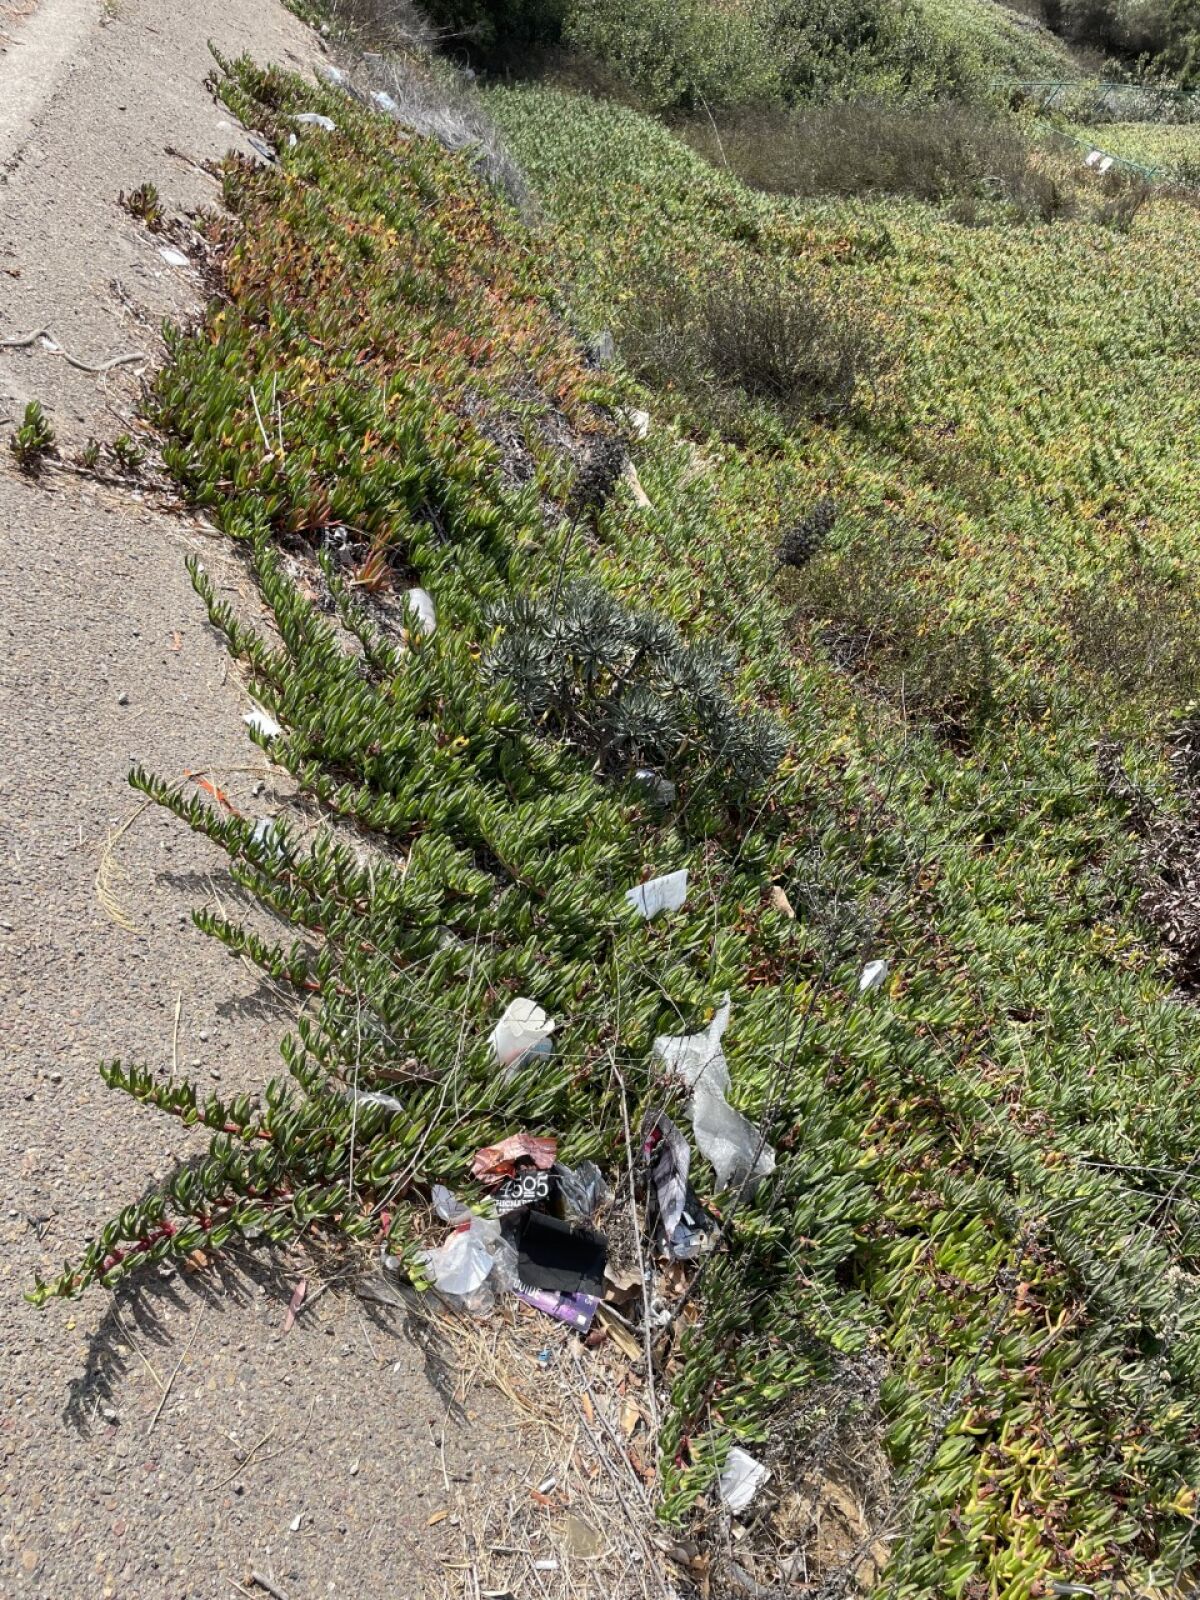 Resident Rayan Hourani calls the trash along La Jolla Parkway "an eyesore and a shame.”